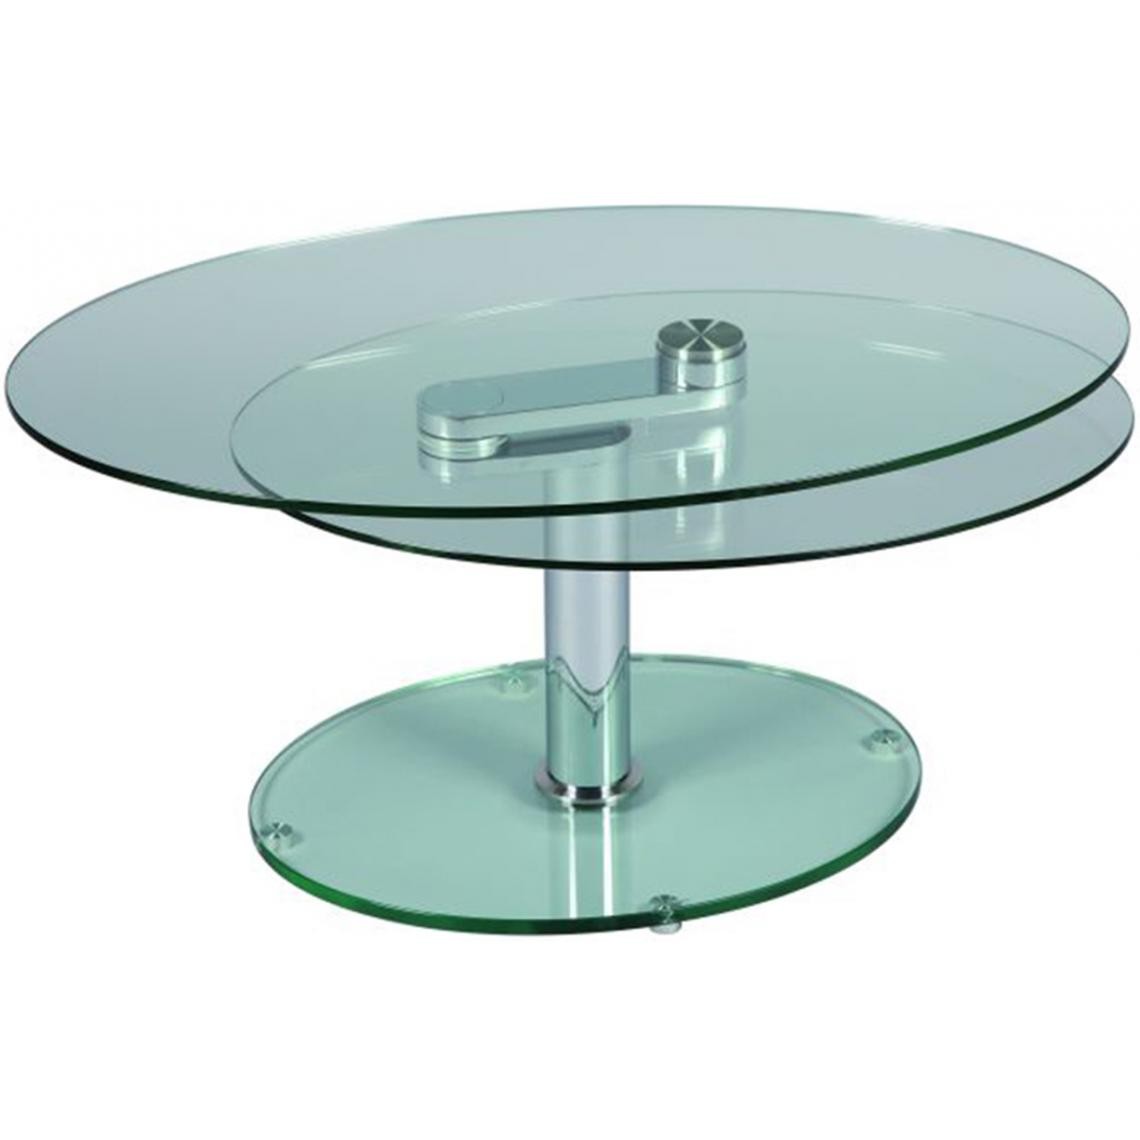 Pegane - Table basse en verre ovale - Tables basses